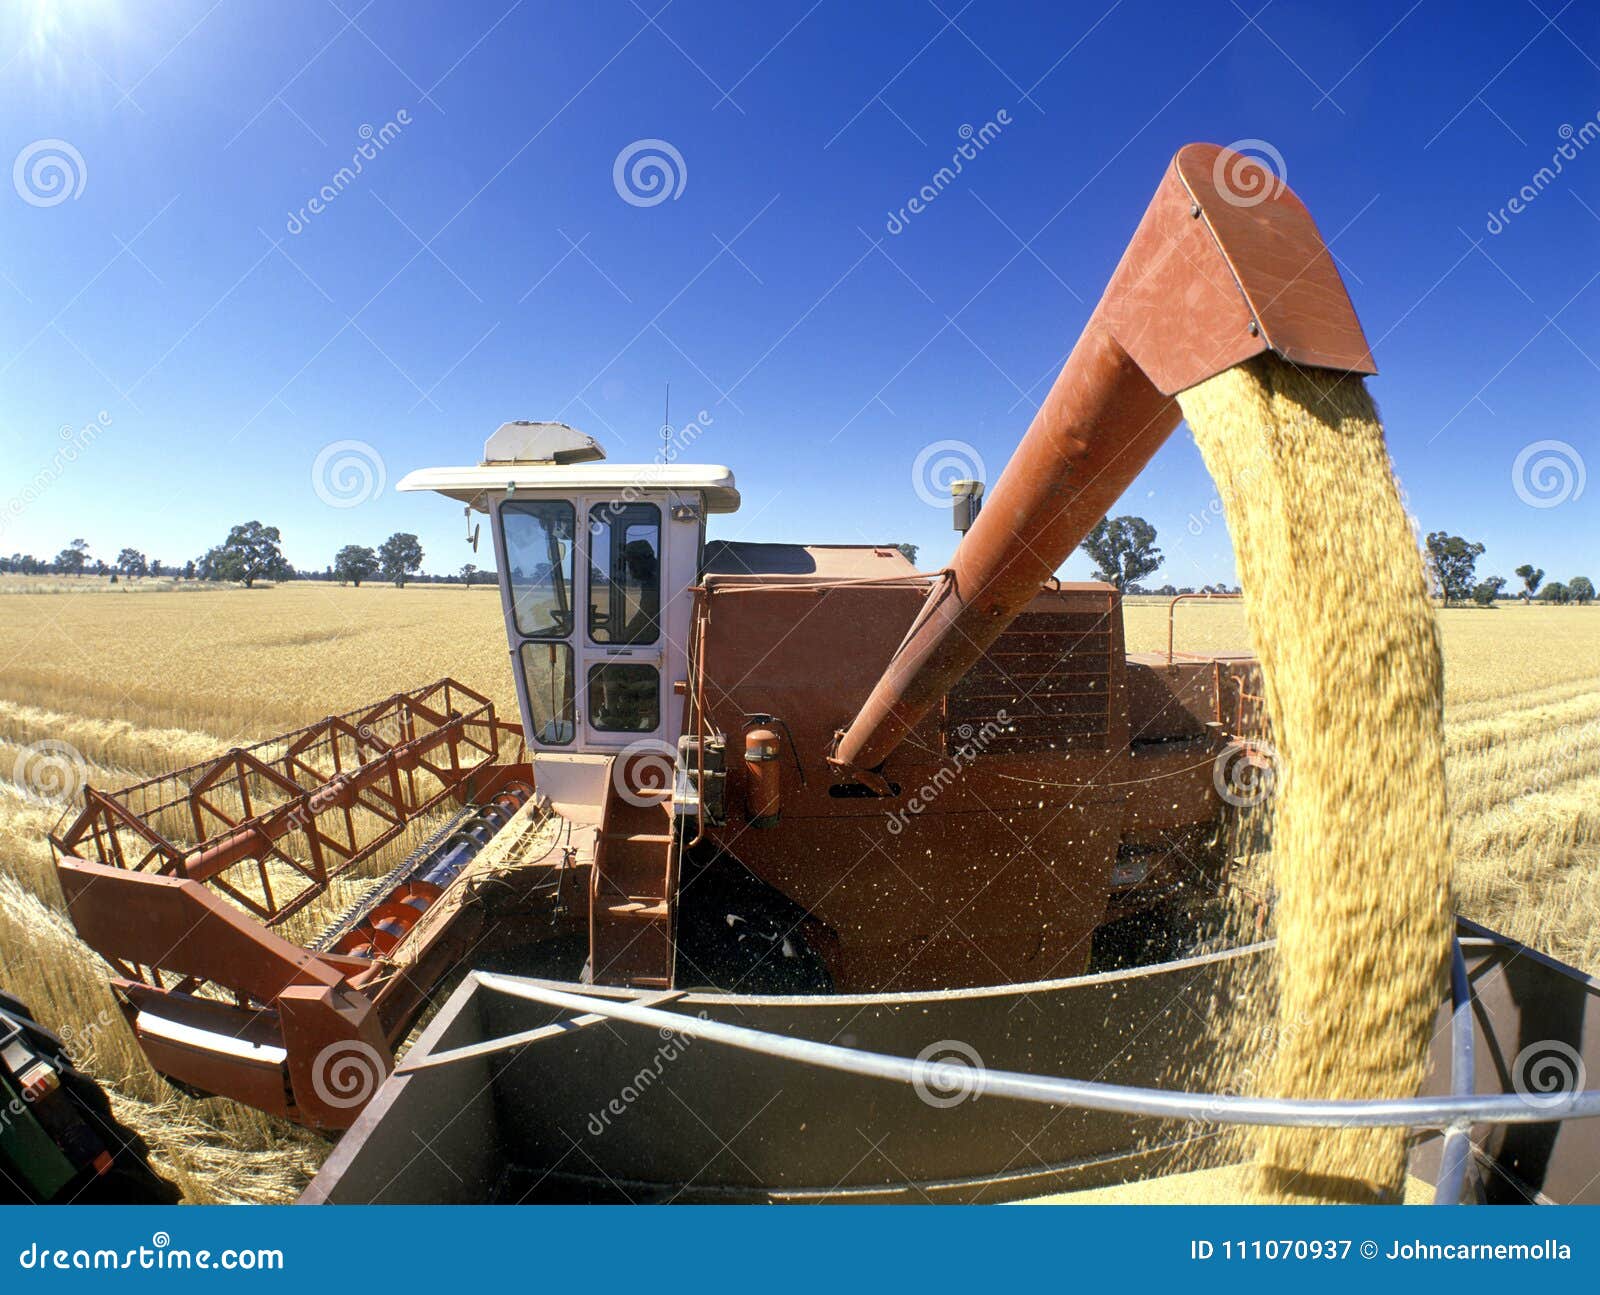 wheat harvest, australia.